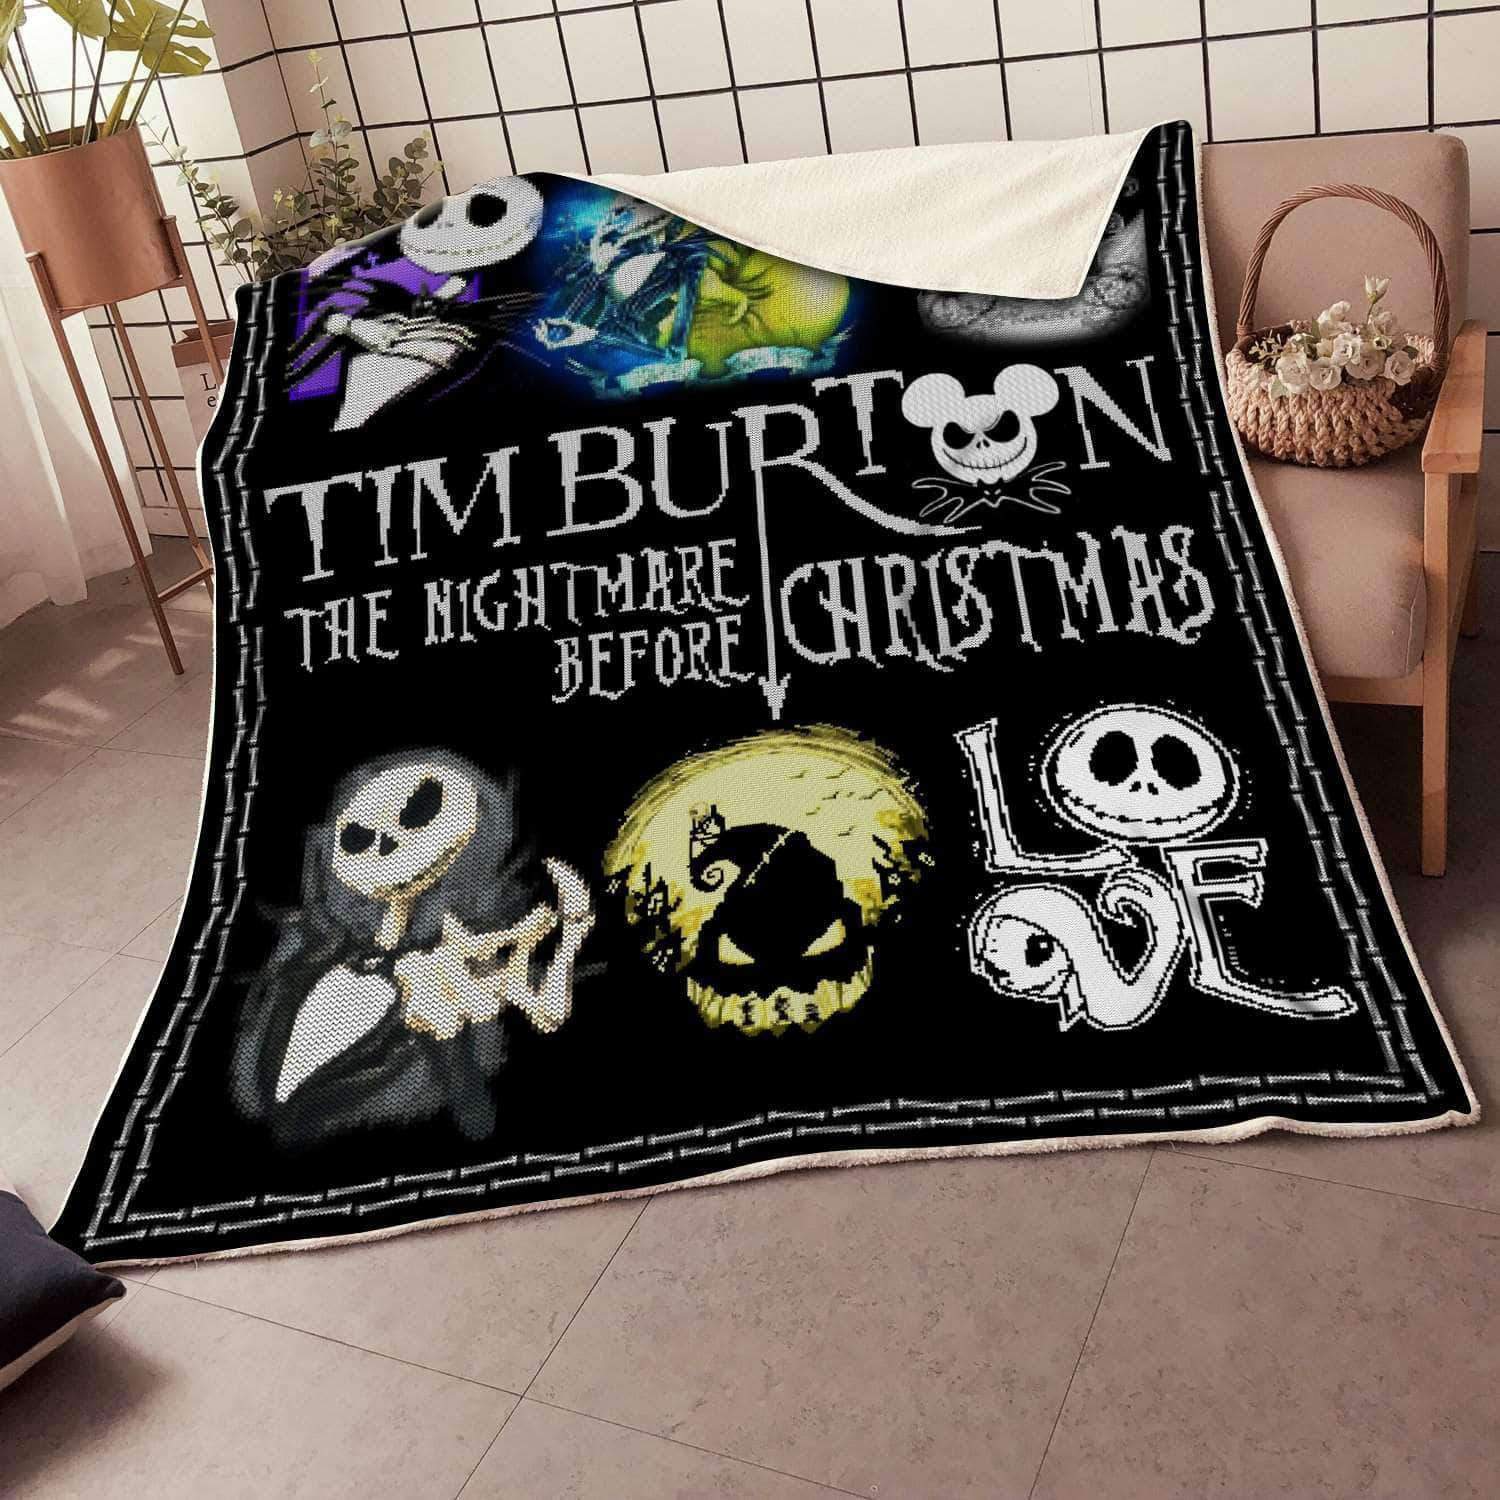 The Nightmare Before Christmas Tim Burton's The Nightmare Before Christmas 3D Fleece Blanket Cool The Nightmare Before Christmas 4061